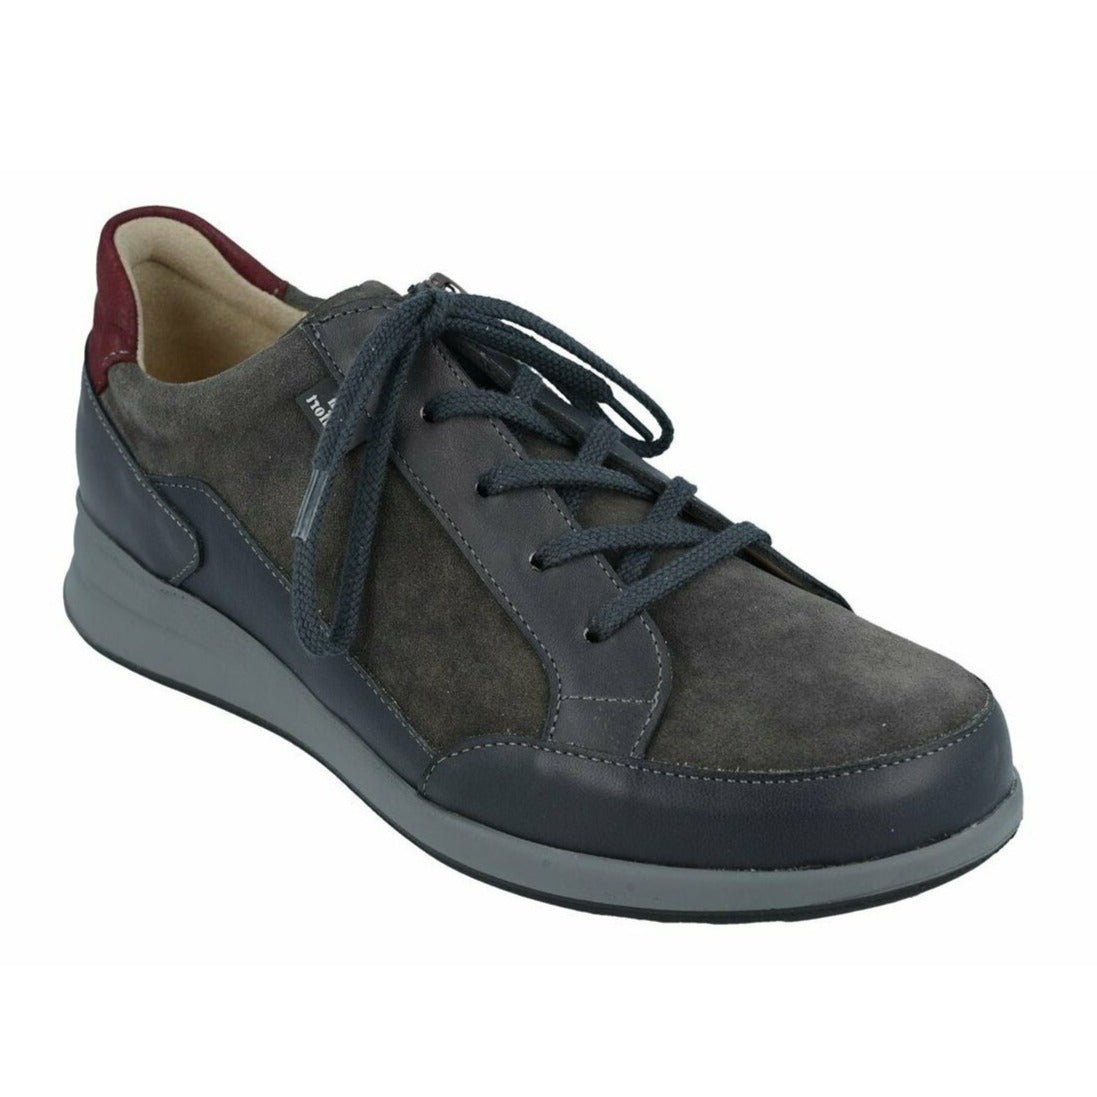 Finn Comfort Women's Prato Walking Shoes 02286 - Anthracite/Bordeaux Velour